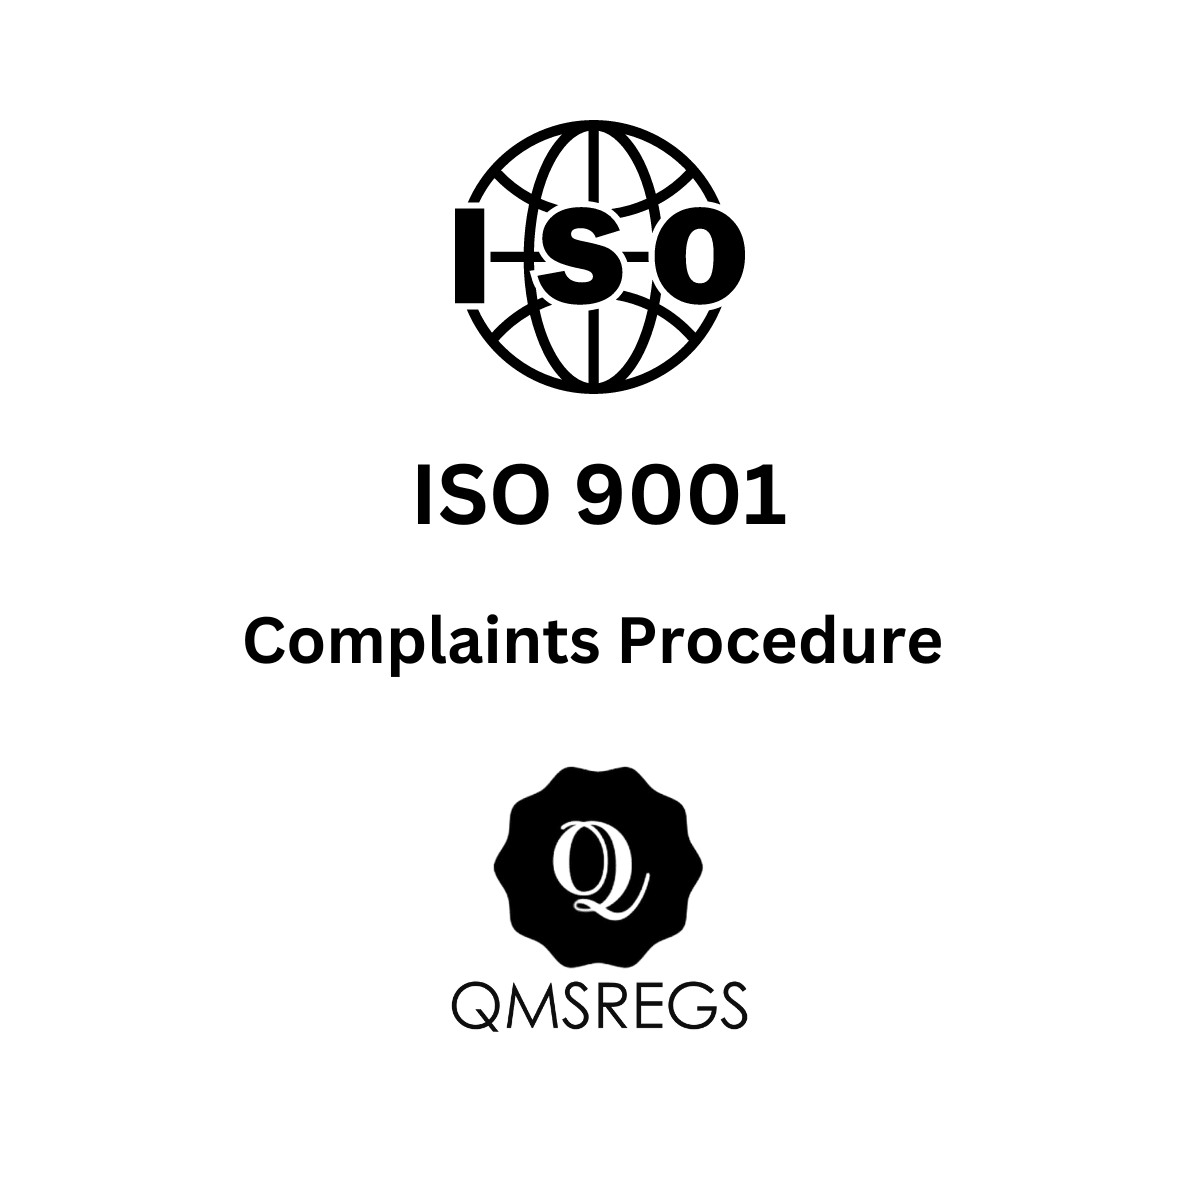 ISO 9001 Complaints Procedure Template